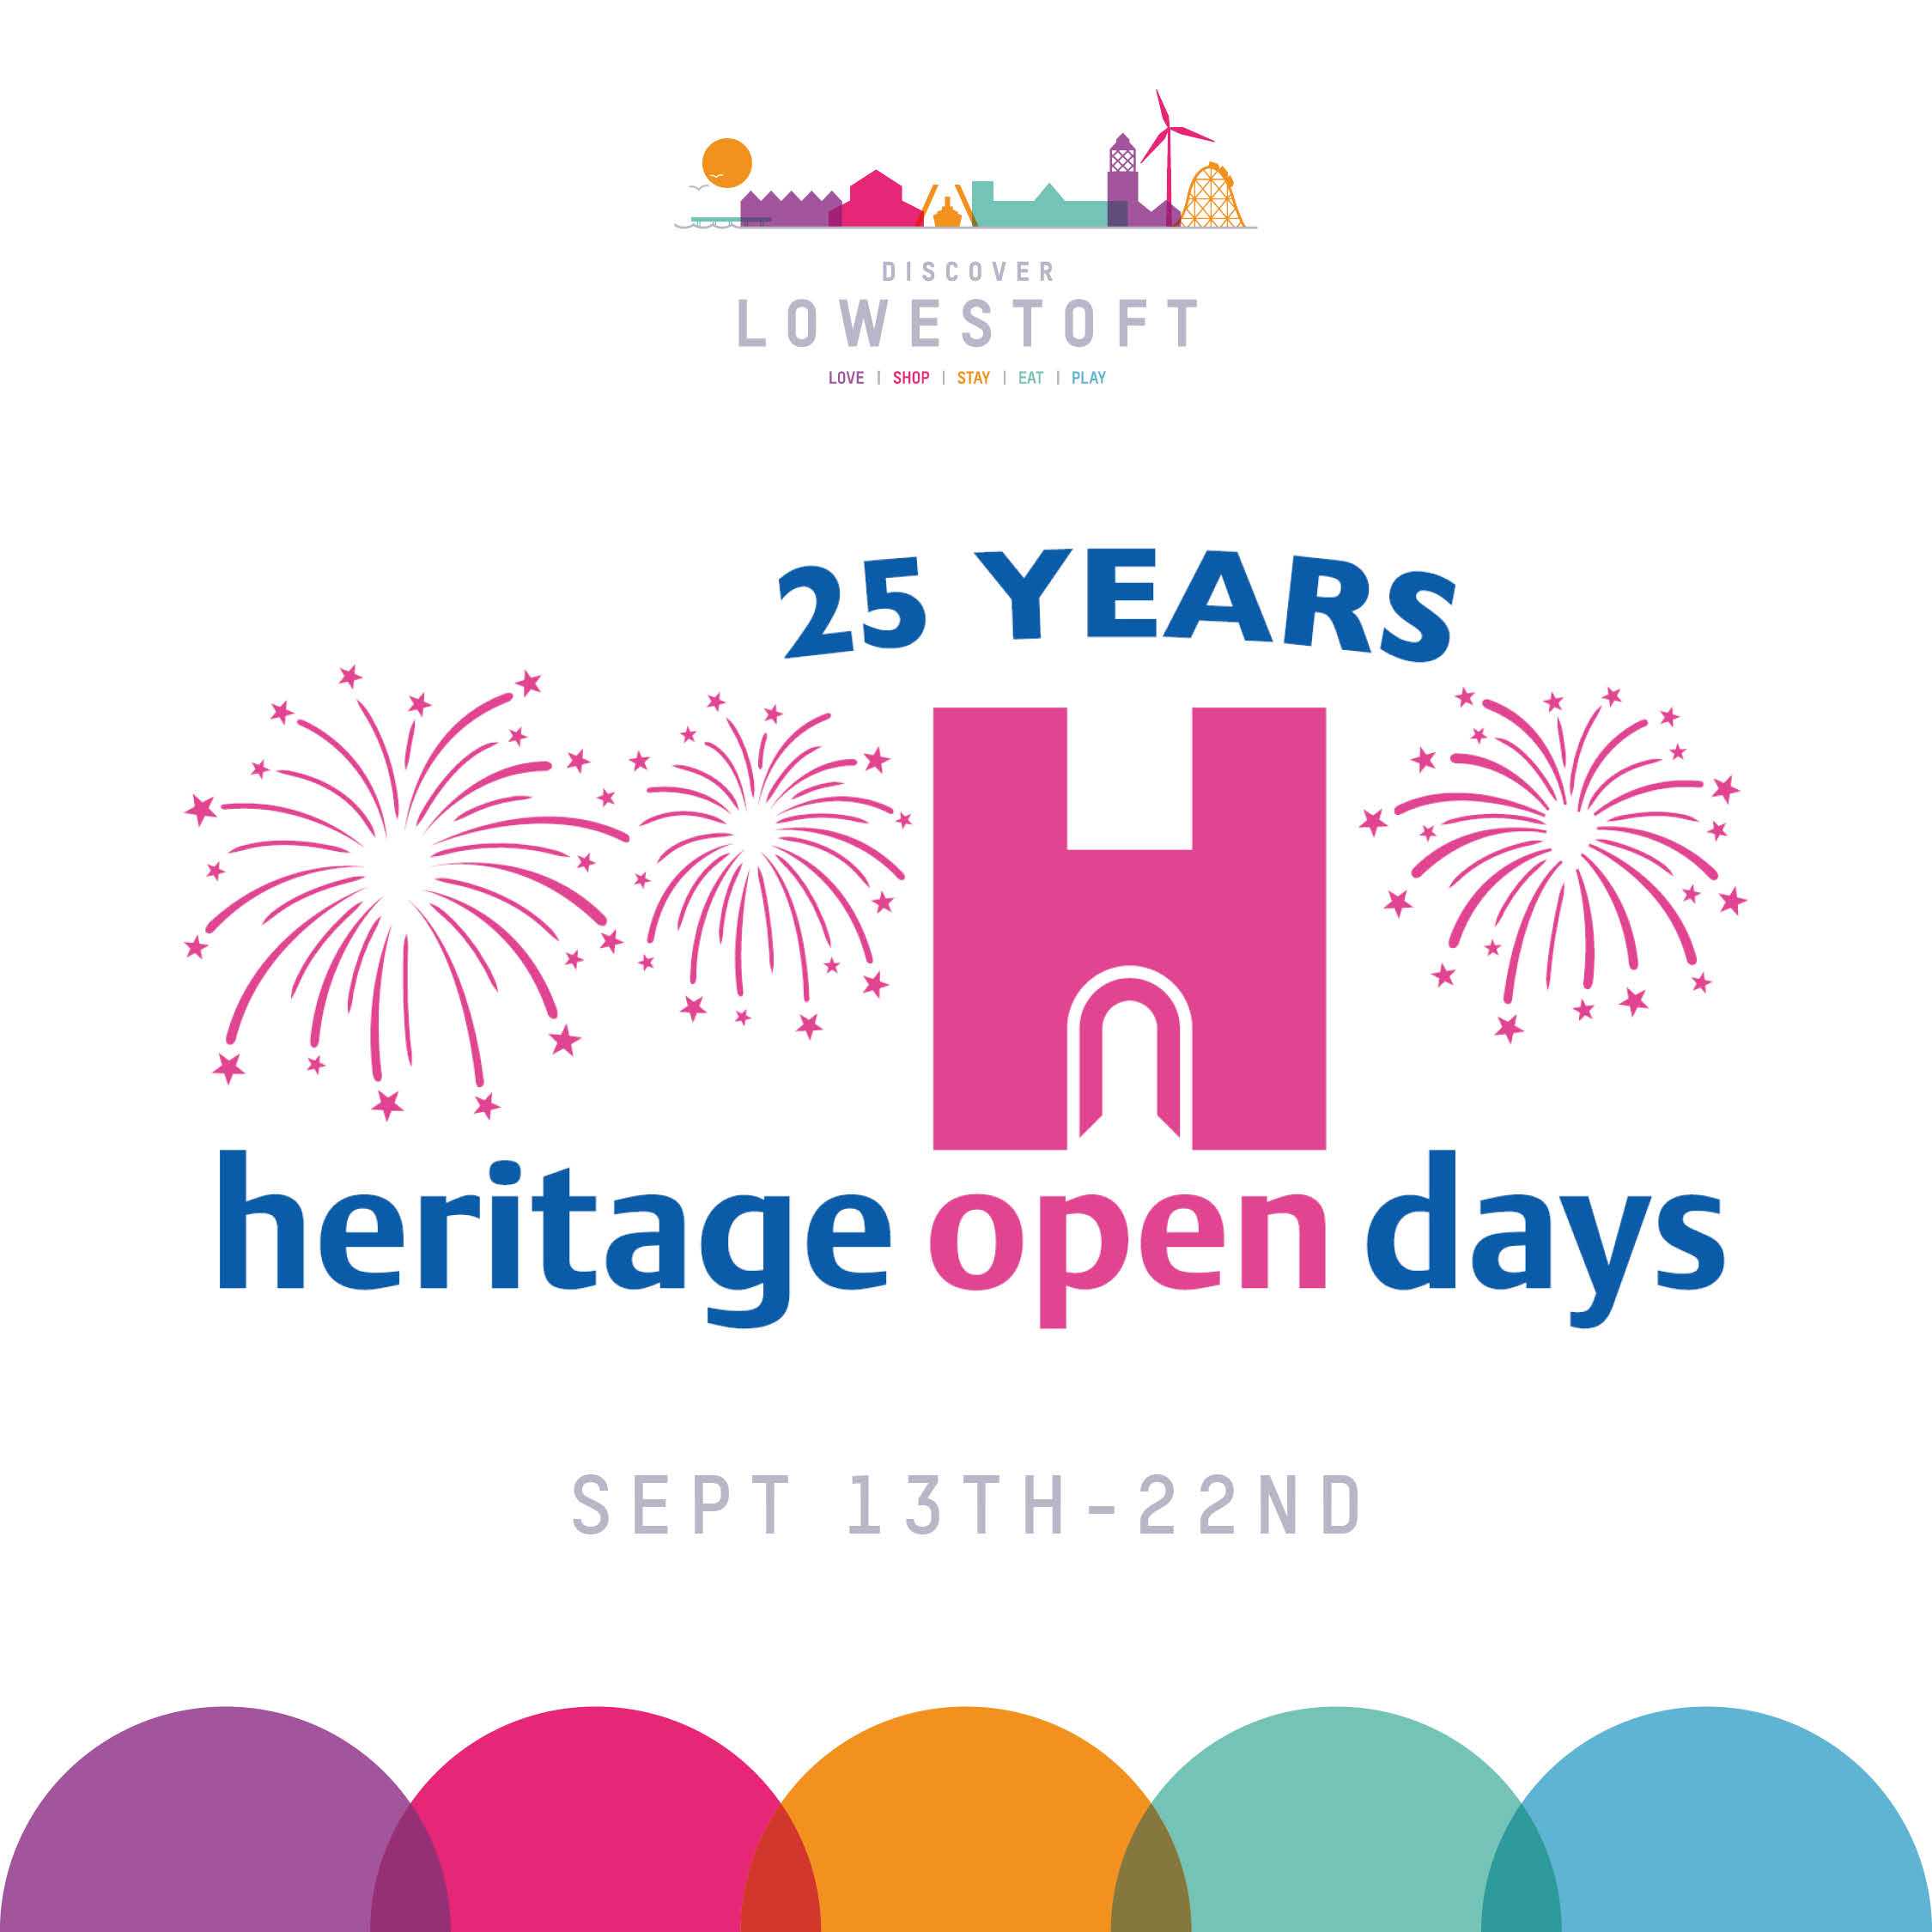 Heritage Open Days - The Lowestoft Scores Walking Tours Image